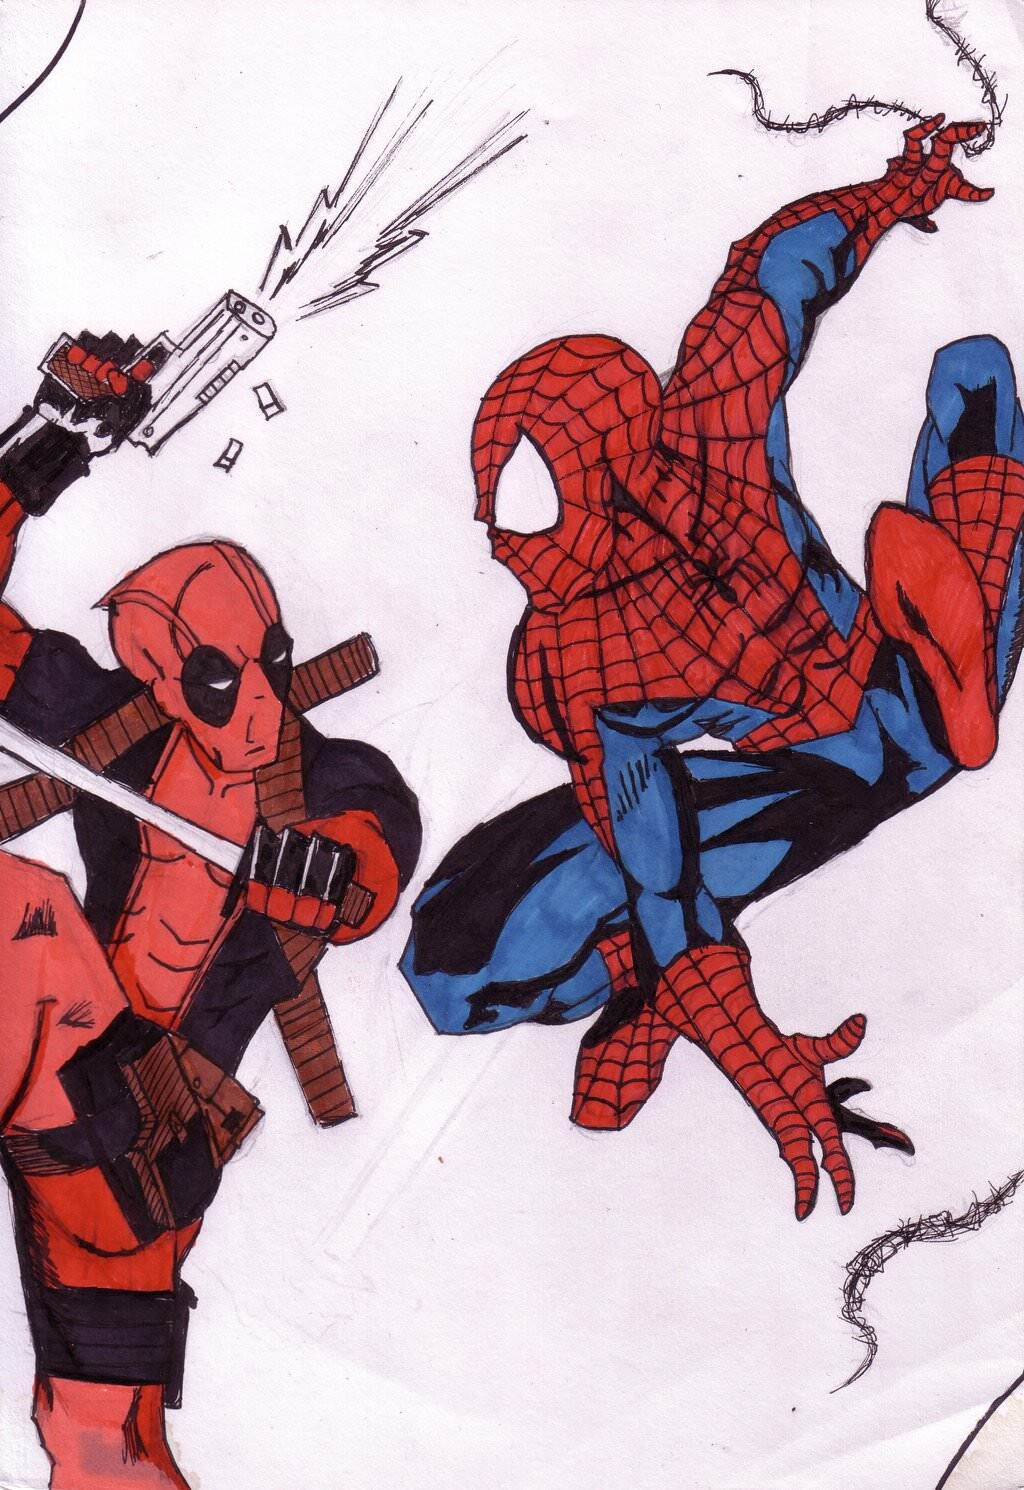 40 Wallpaper Spiderman and Deadpool Marvel Comics DOWNLOAD FREE 14267